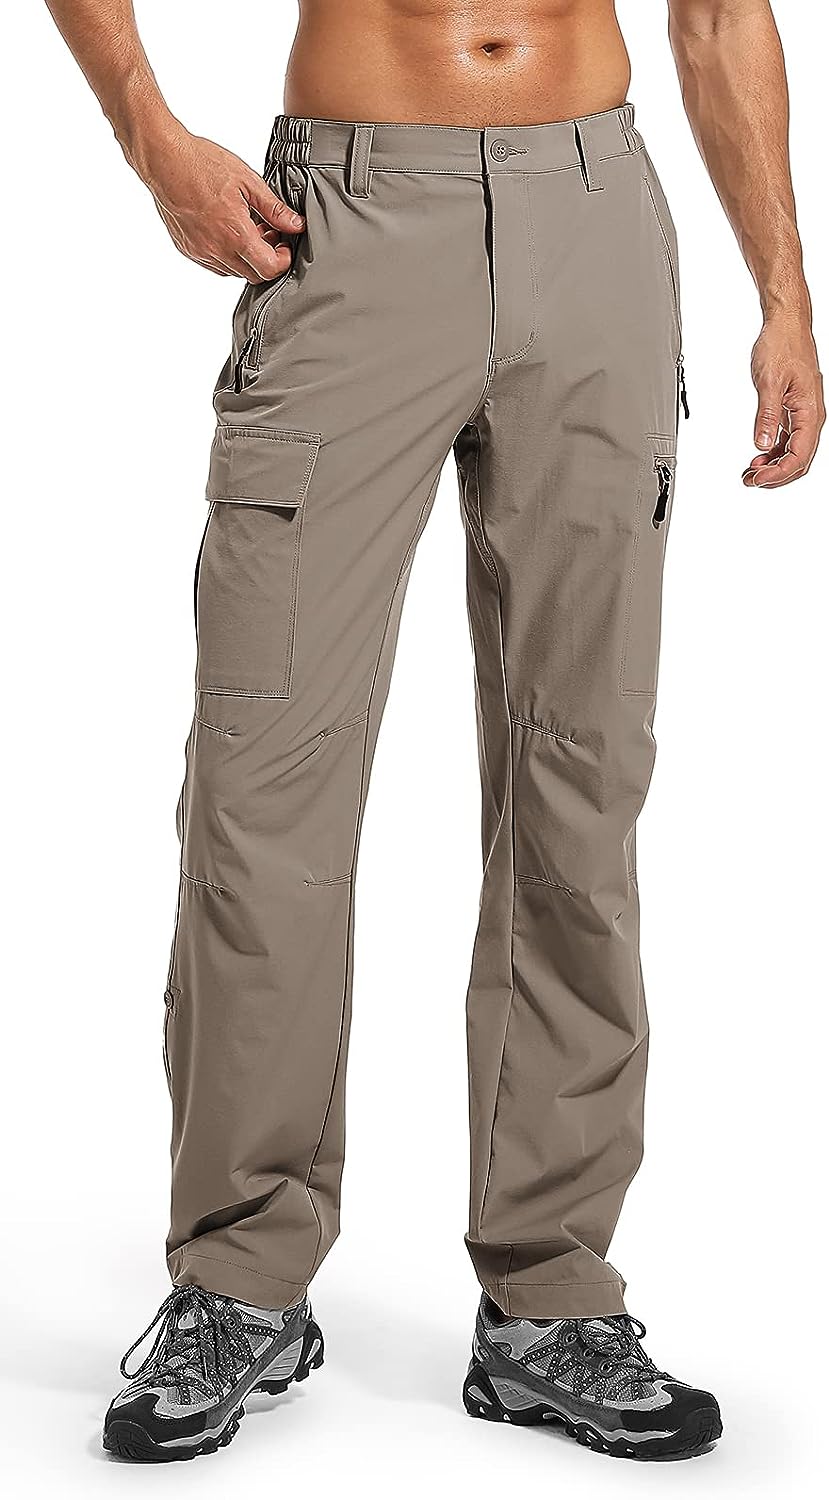 Moosehill Men's Hiking Cargo Pants - Lightweight, Quick Dry, Waterproof for Tactical Outdoor Hunting, Camping, Fishing Khaki / XXXL